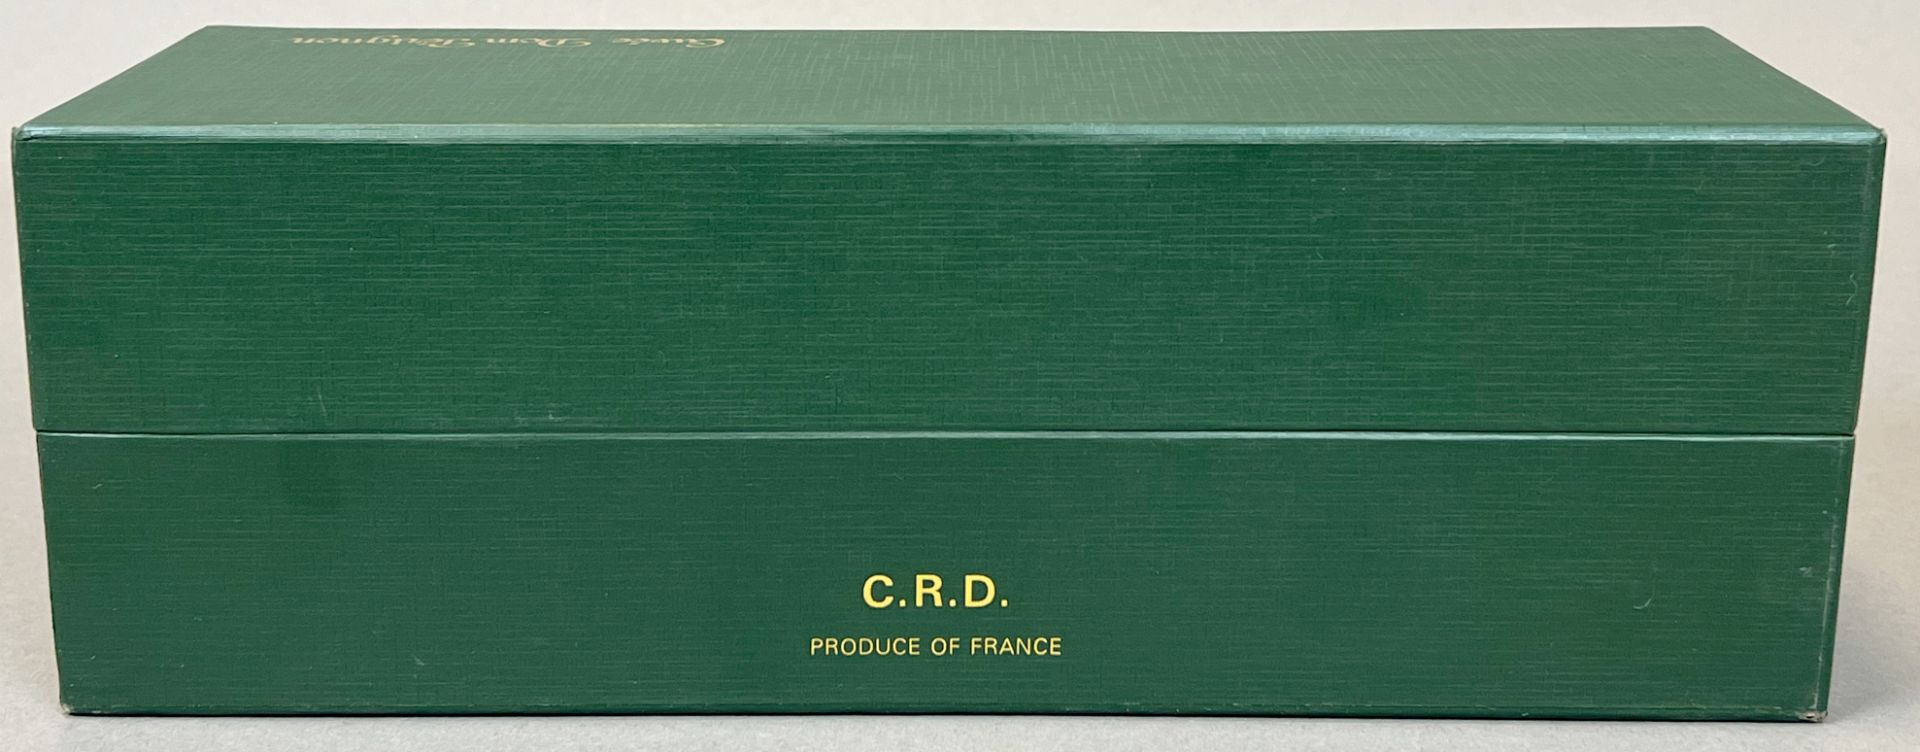 1 bottle of Champagne. MOËT & CHANDON Cuvée DOM PÉRIGNON Vintage 1973. - Image 5 of 7